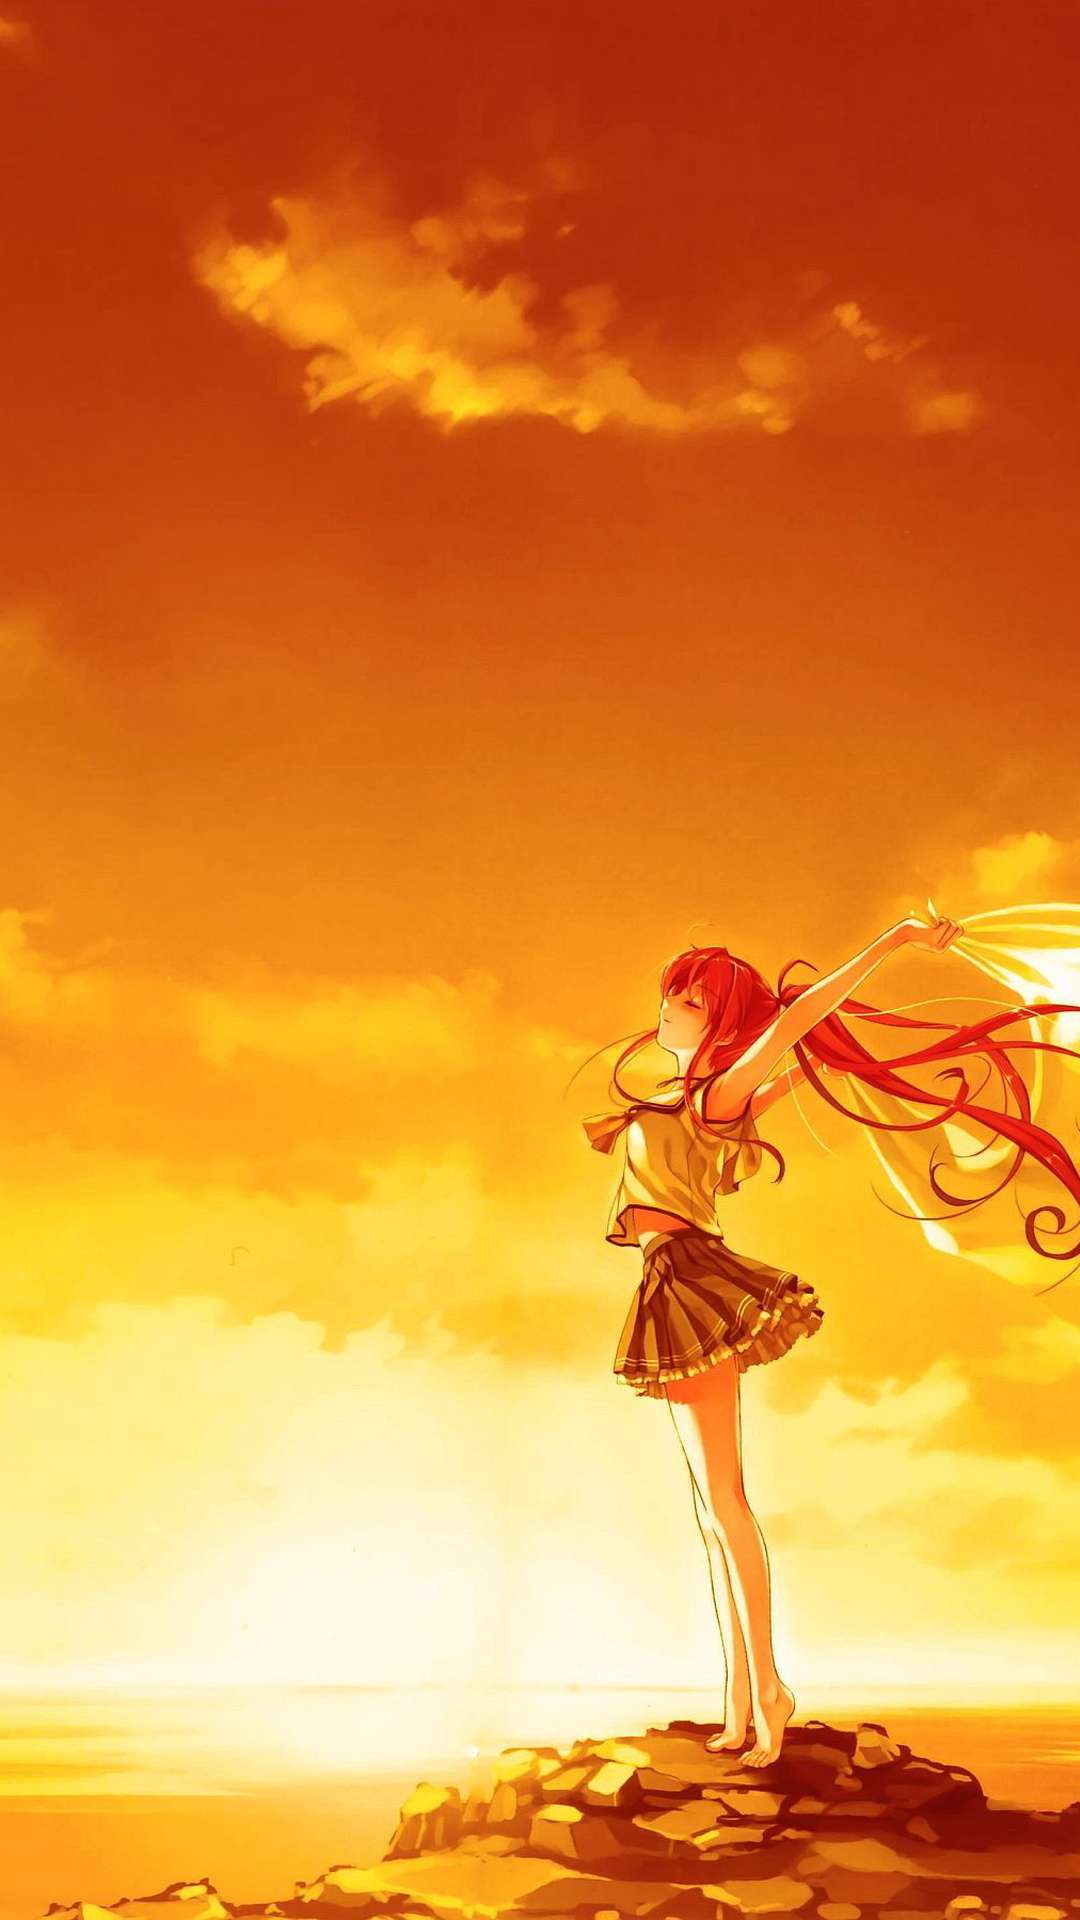 Wallpaper ID 73657  anime girl anime hd 4k yellow deviantart free  download